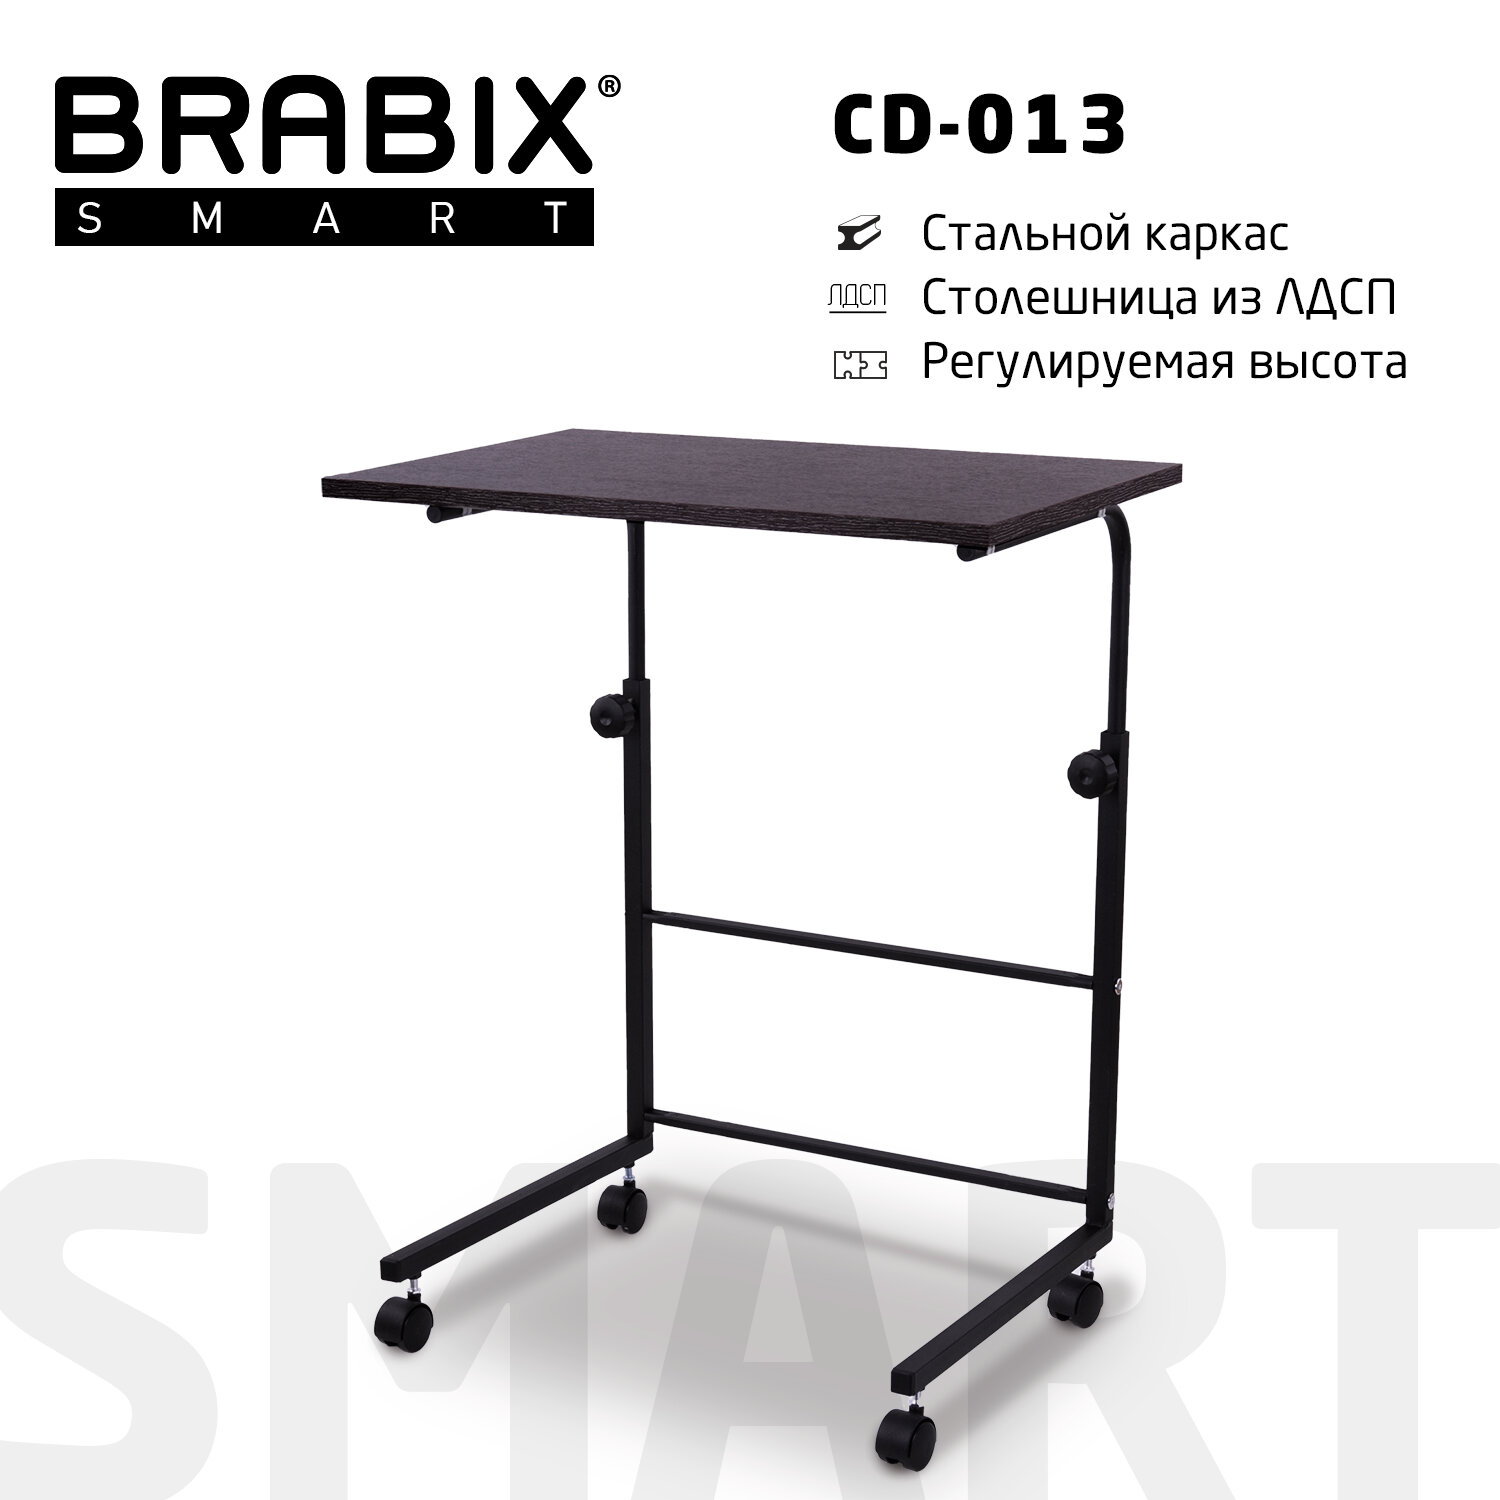 Brabix  BRABIX Smart CD-013 641883